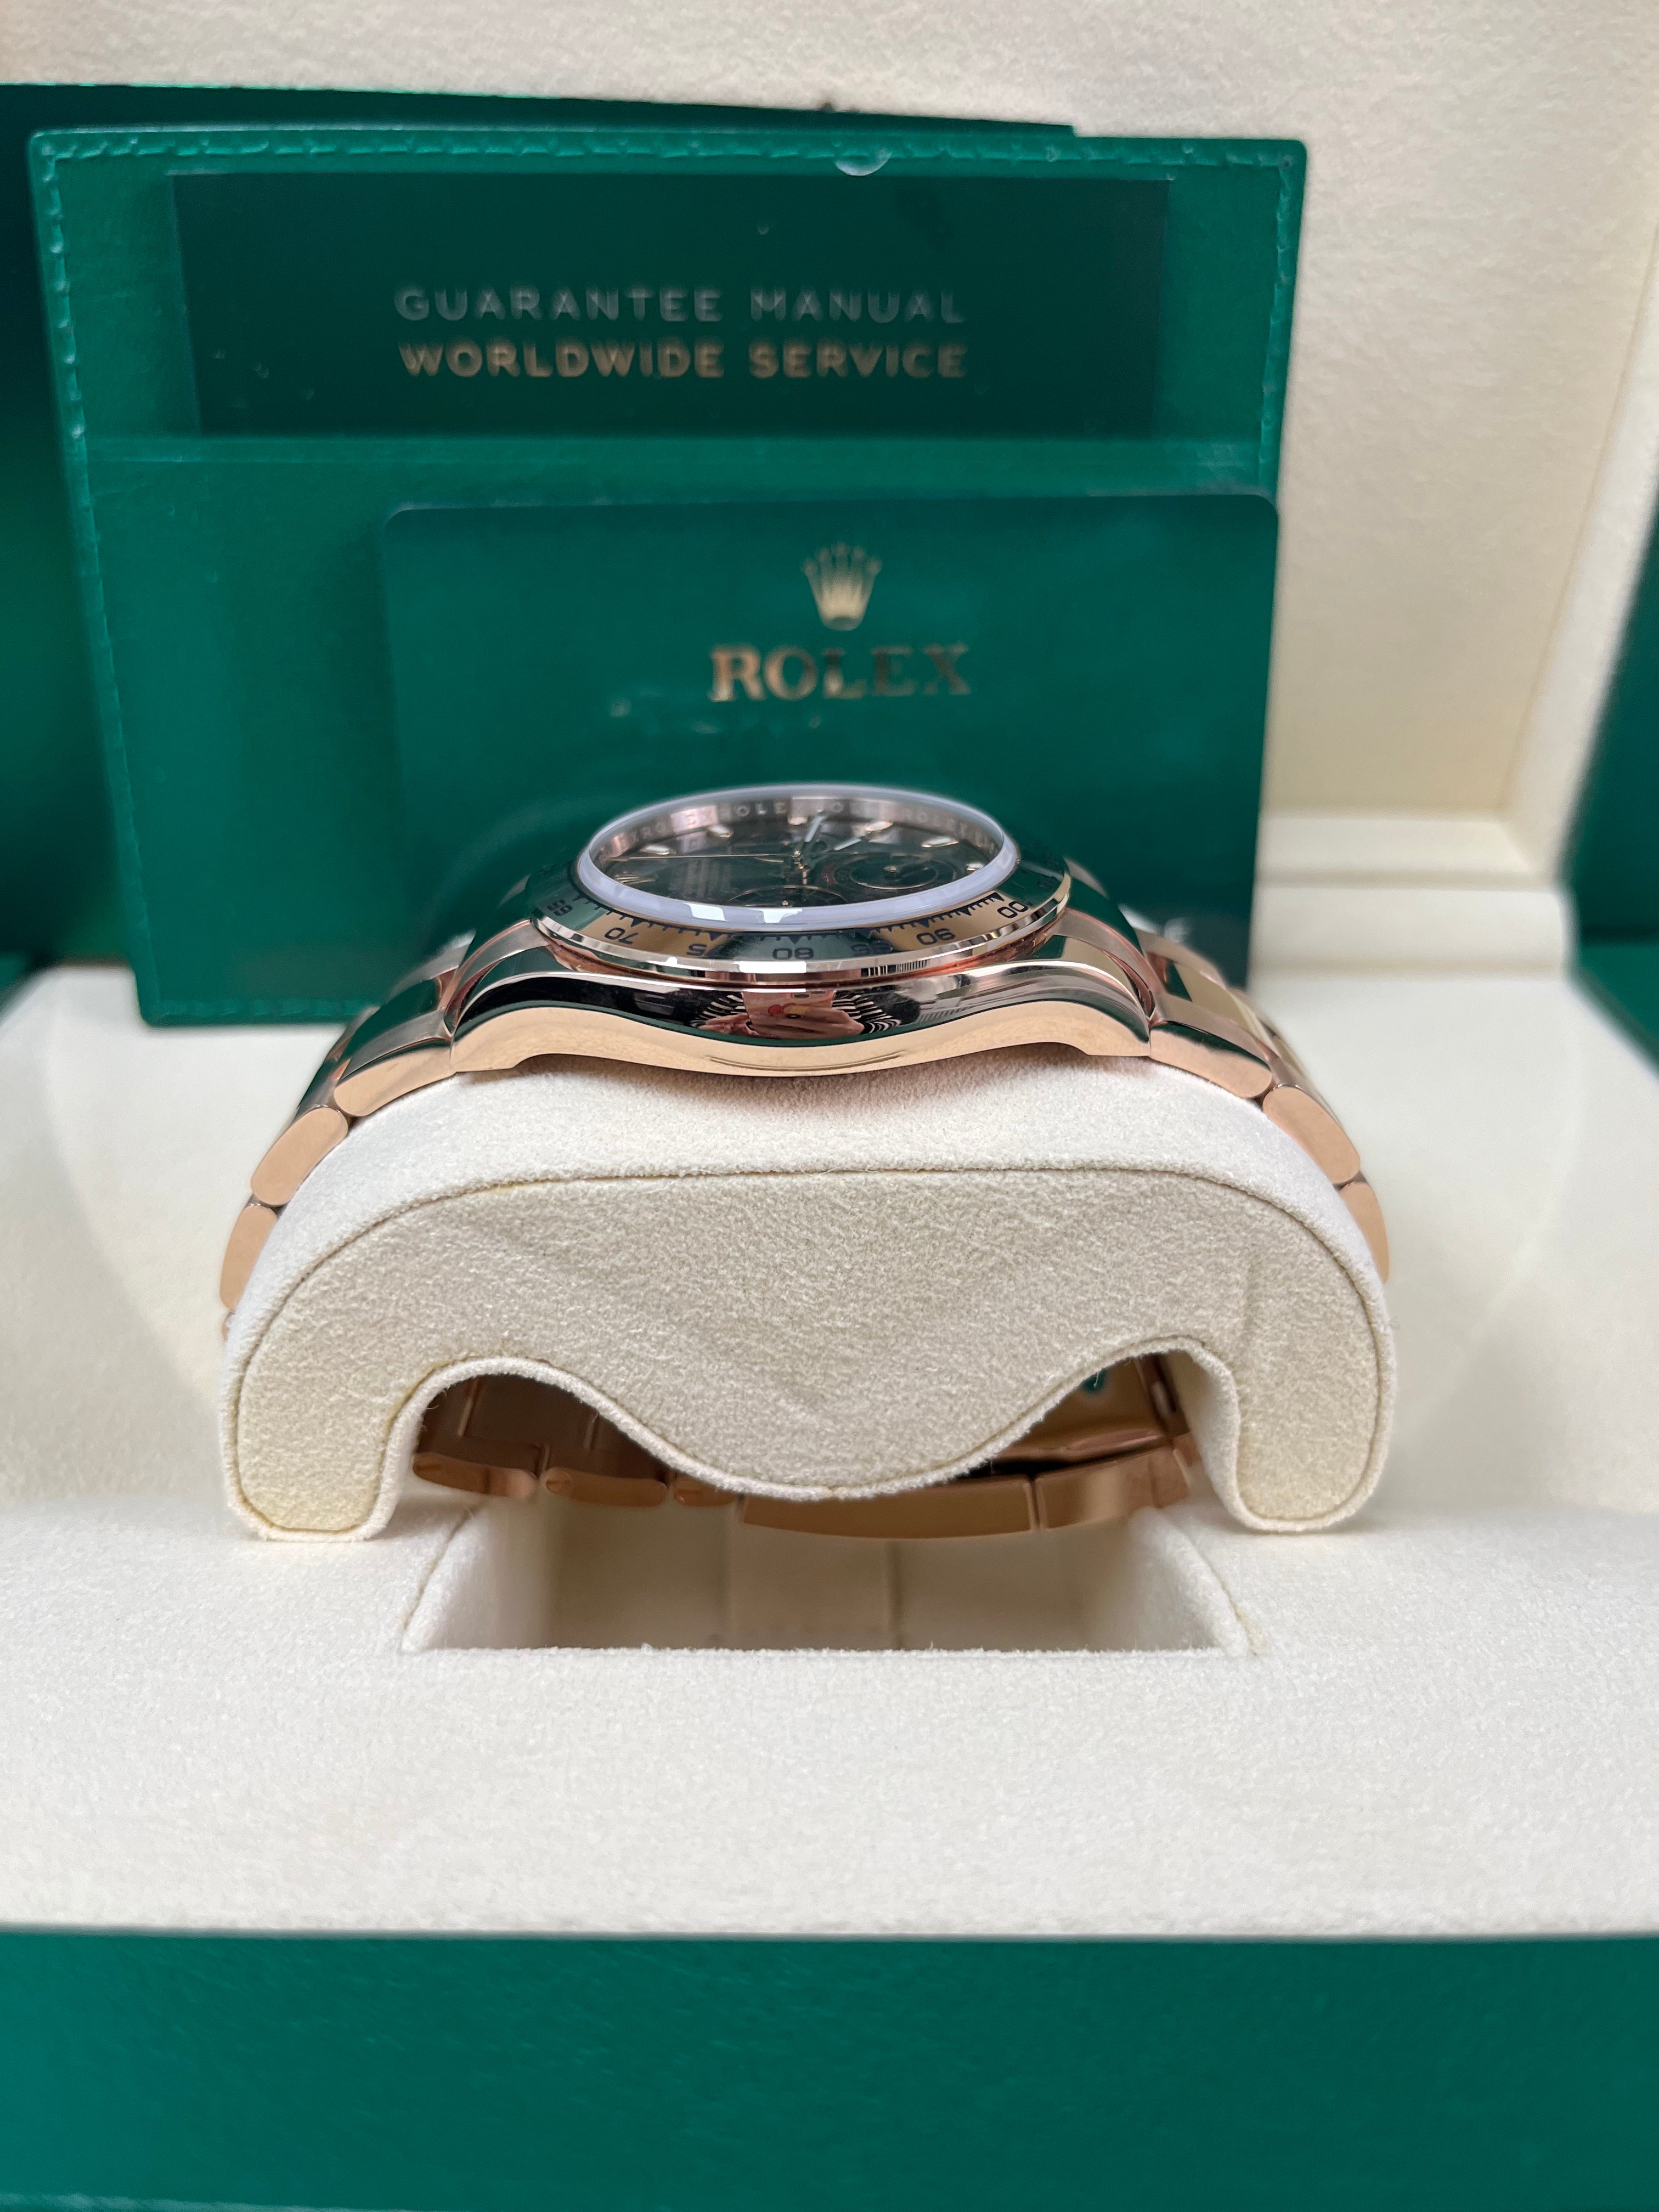 Rolex Everose Gold Cosmograph Daytona 40 Watch - Chocolate and Black Index Dial (Ref # 116505 chocbki)